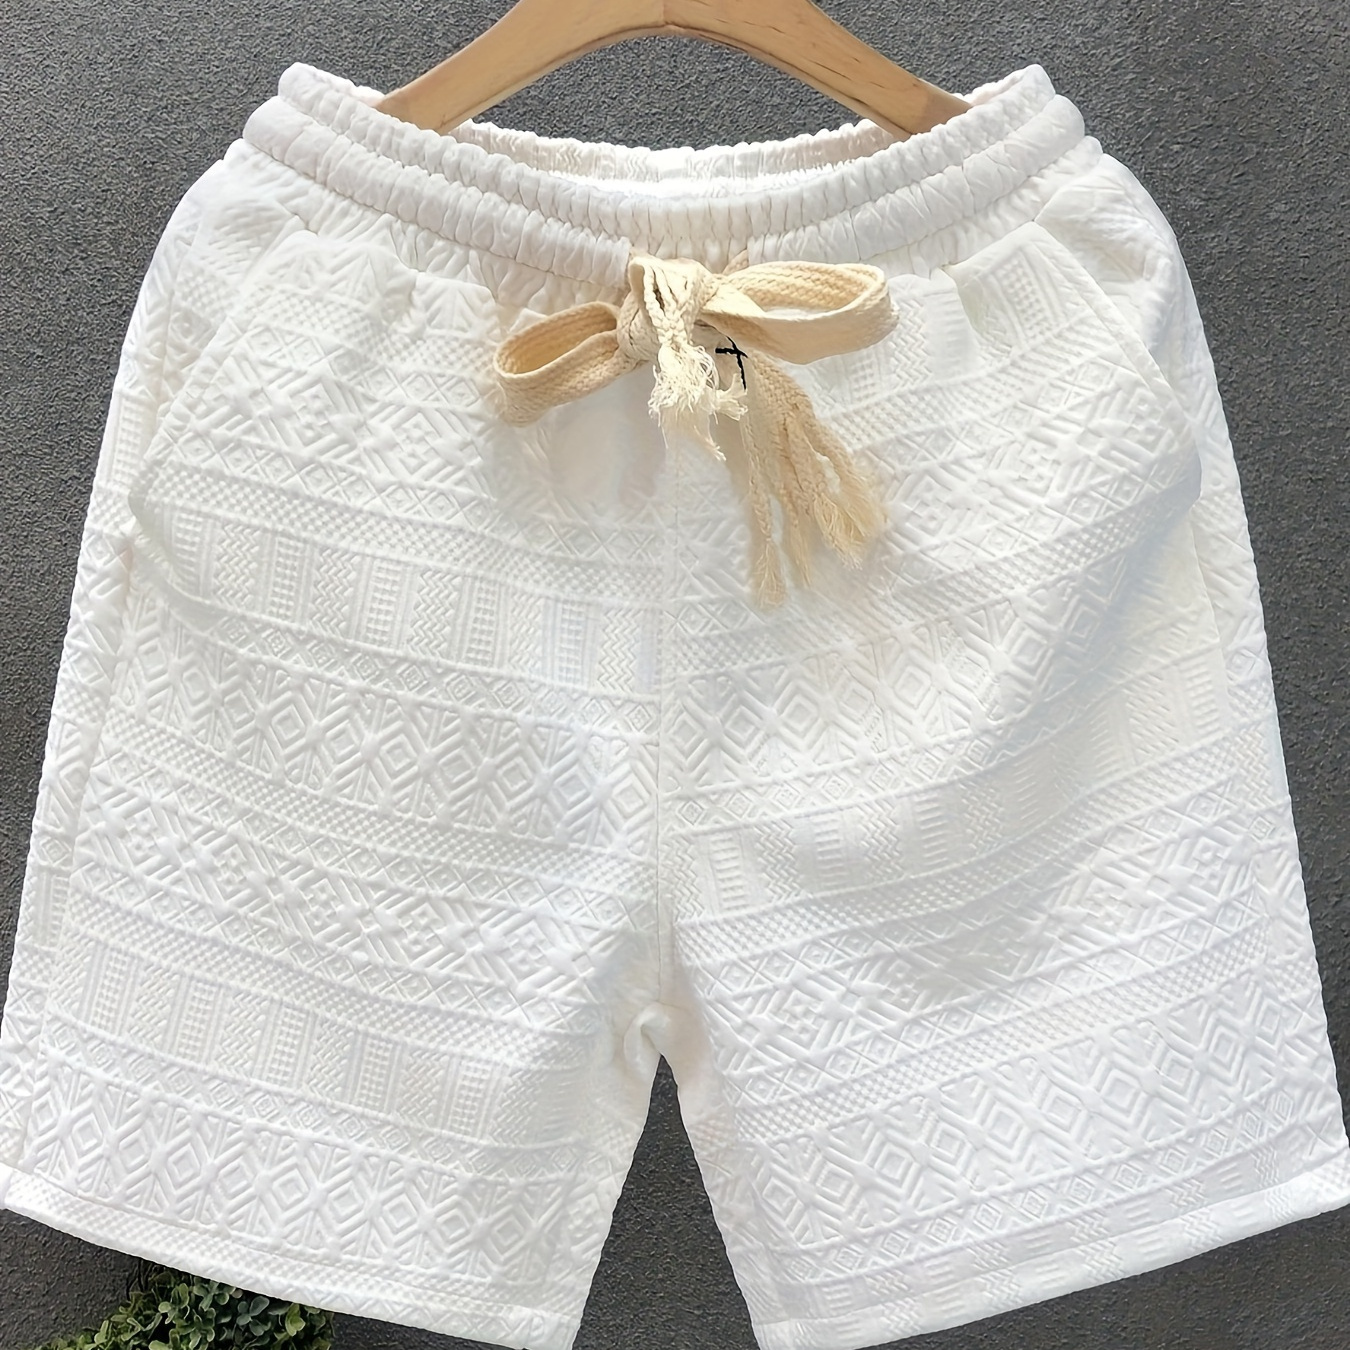 

Men's Casual Drawstring Shorts, Comfortable Drawstring Waist Summer Breathable Textured Fabric Shorts, Outdoor Beach Wear